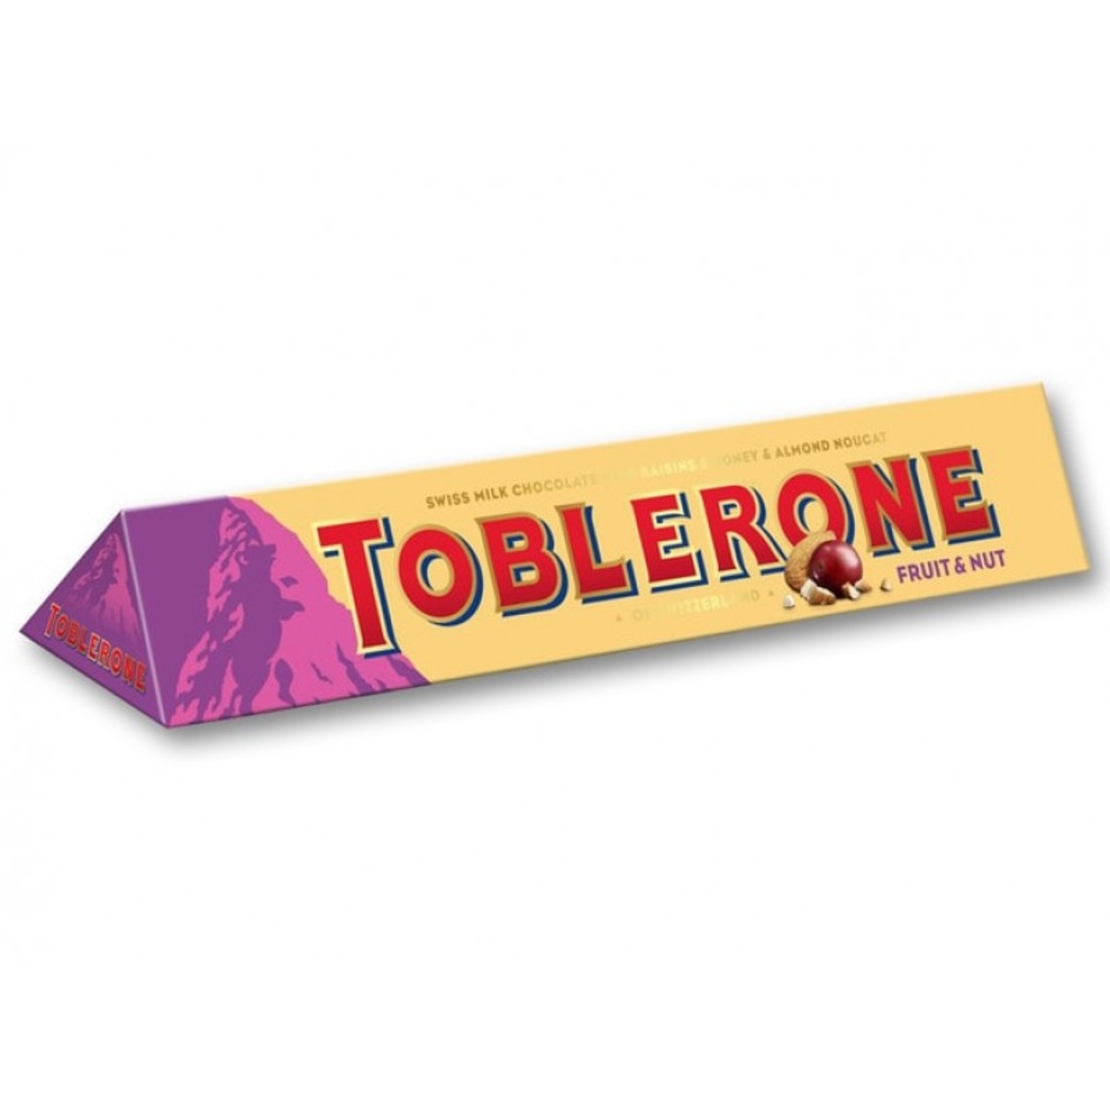 Toblerone -Swiss Milk Chocolate with Fruit & Nut 100g